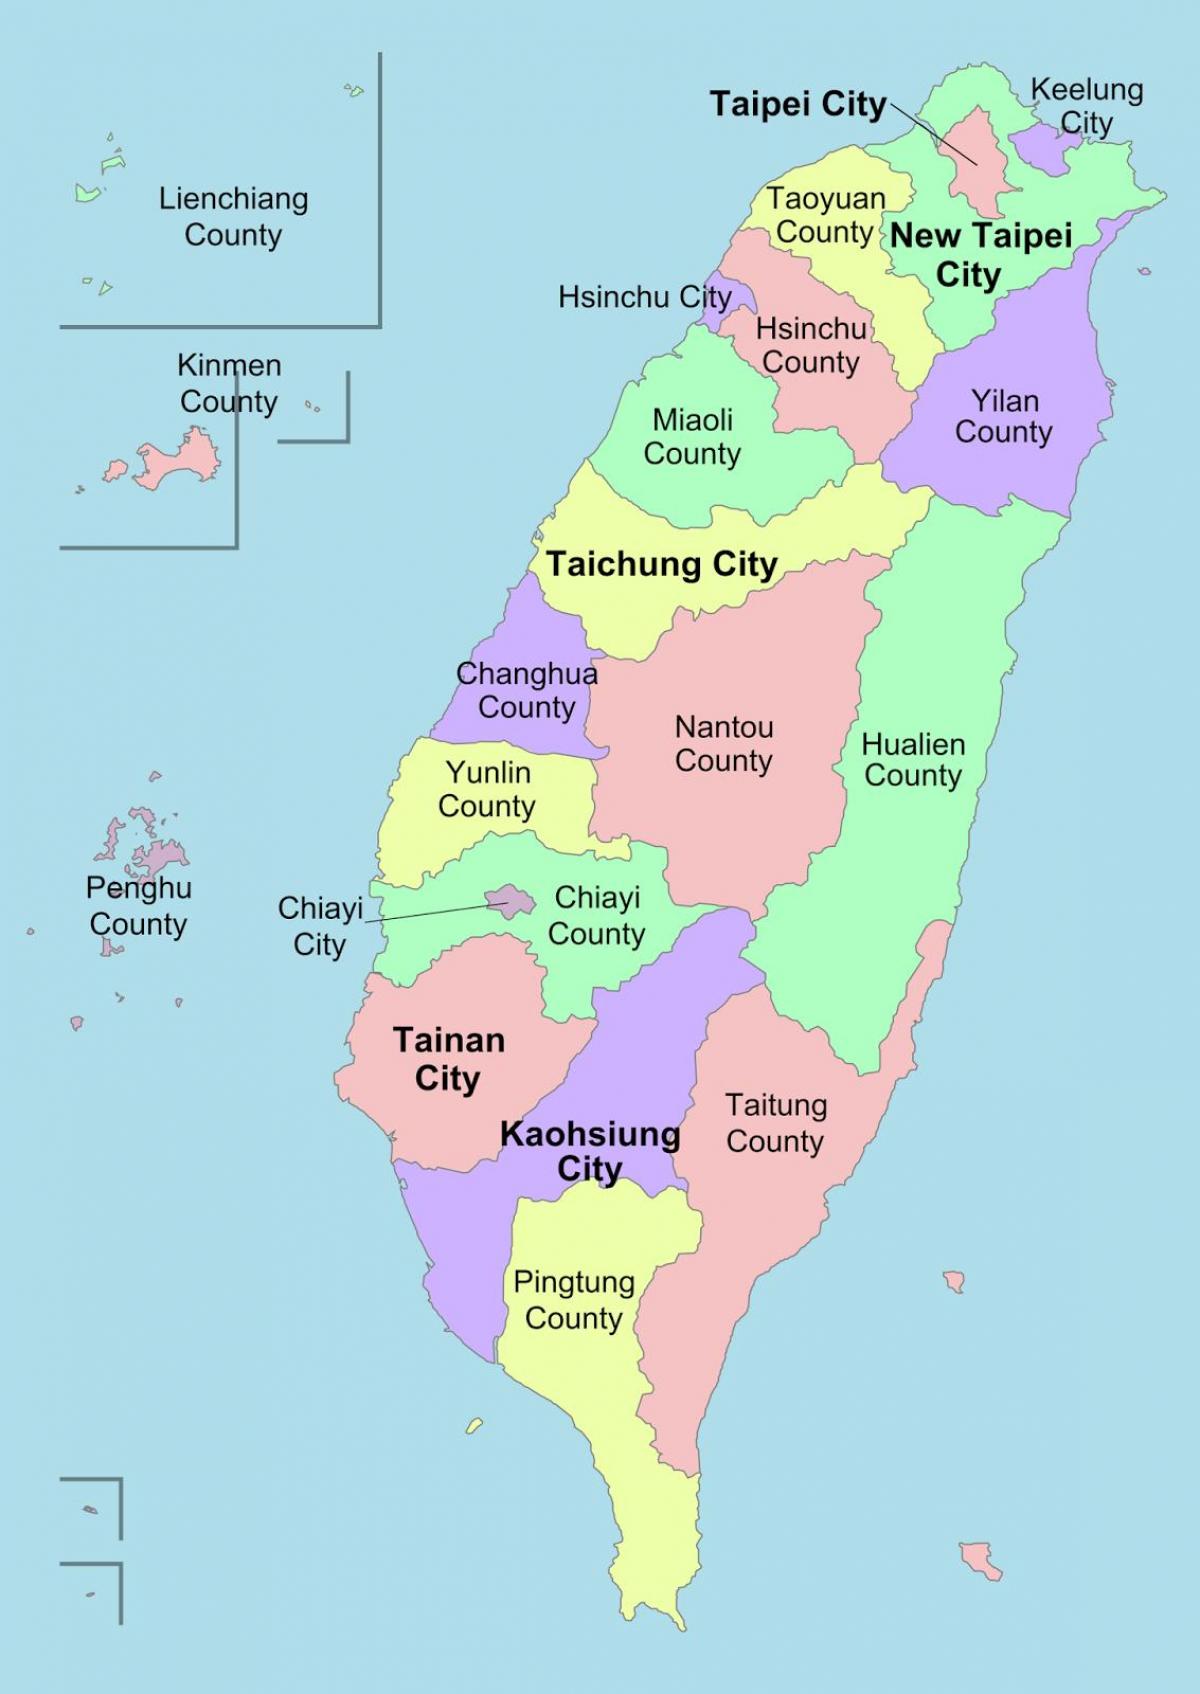 Map of Taiwan county 